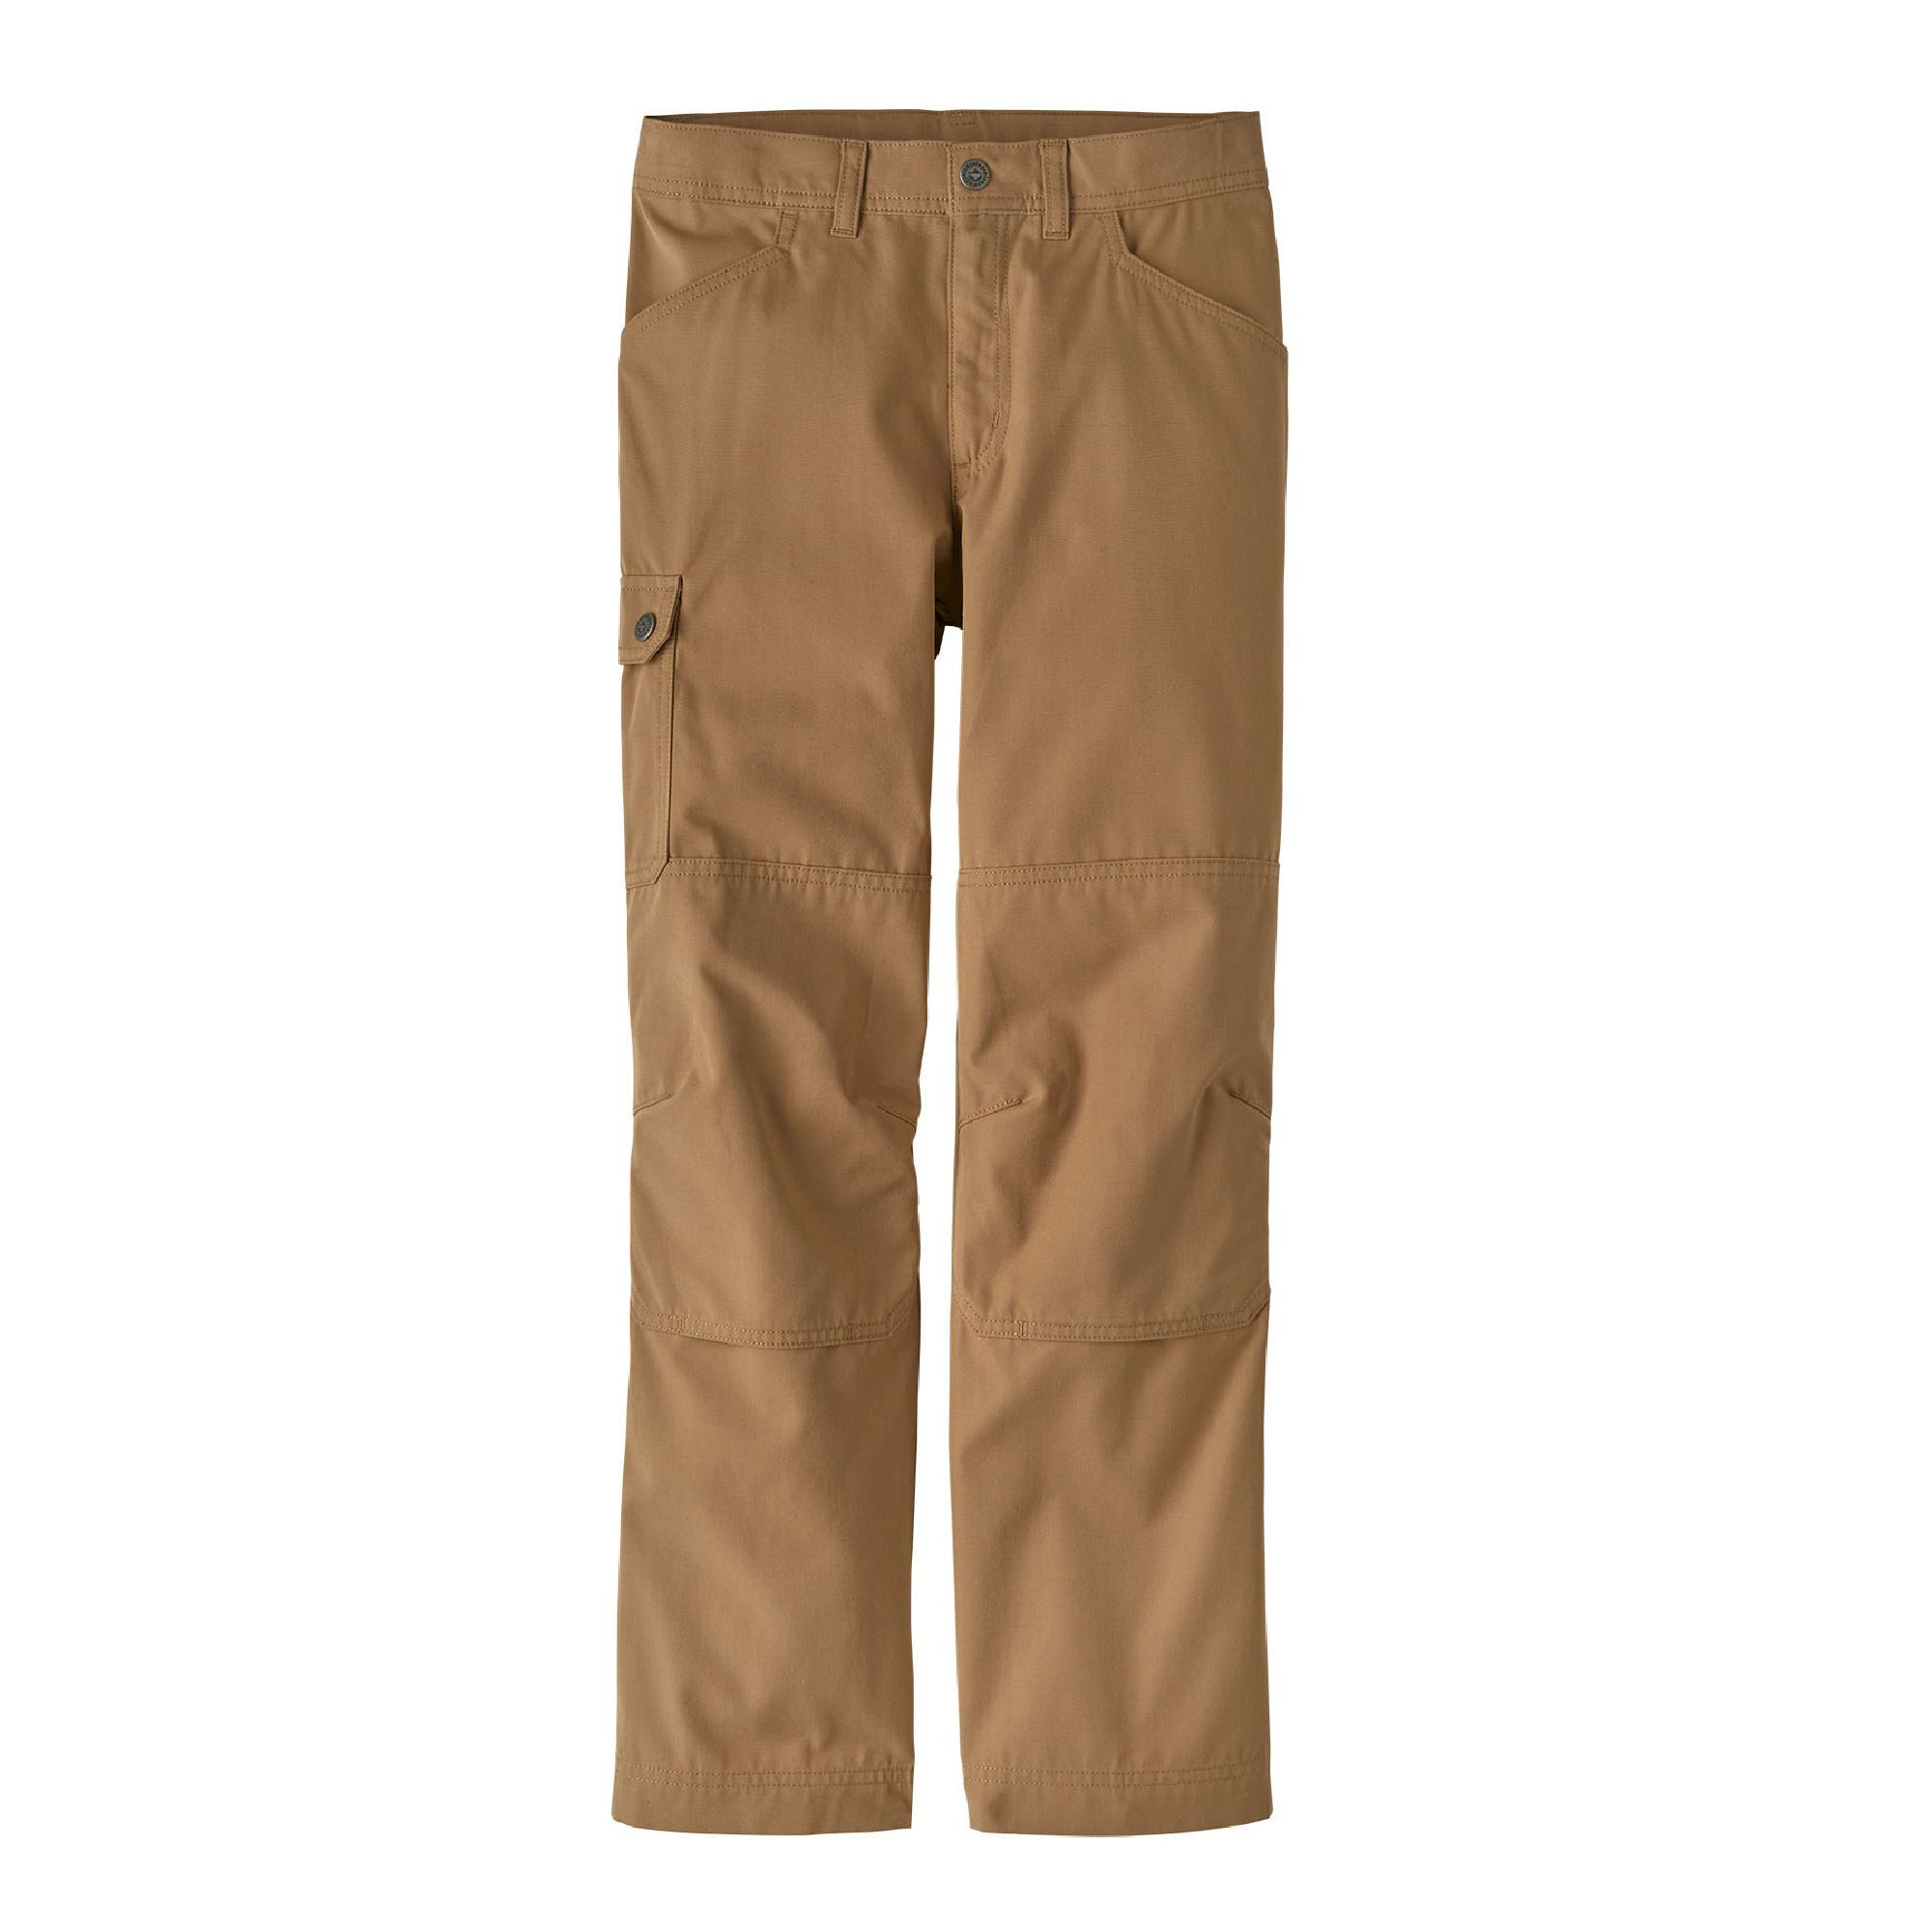 Patagonia Boys' Durable Hike Pants - Walking trousers - Kids